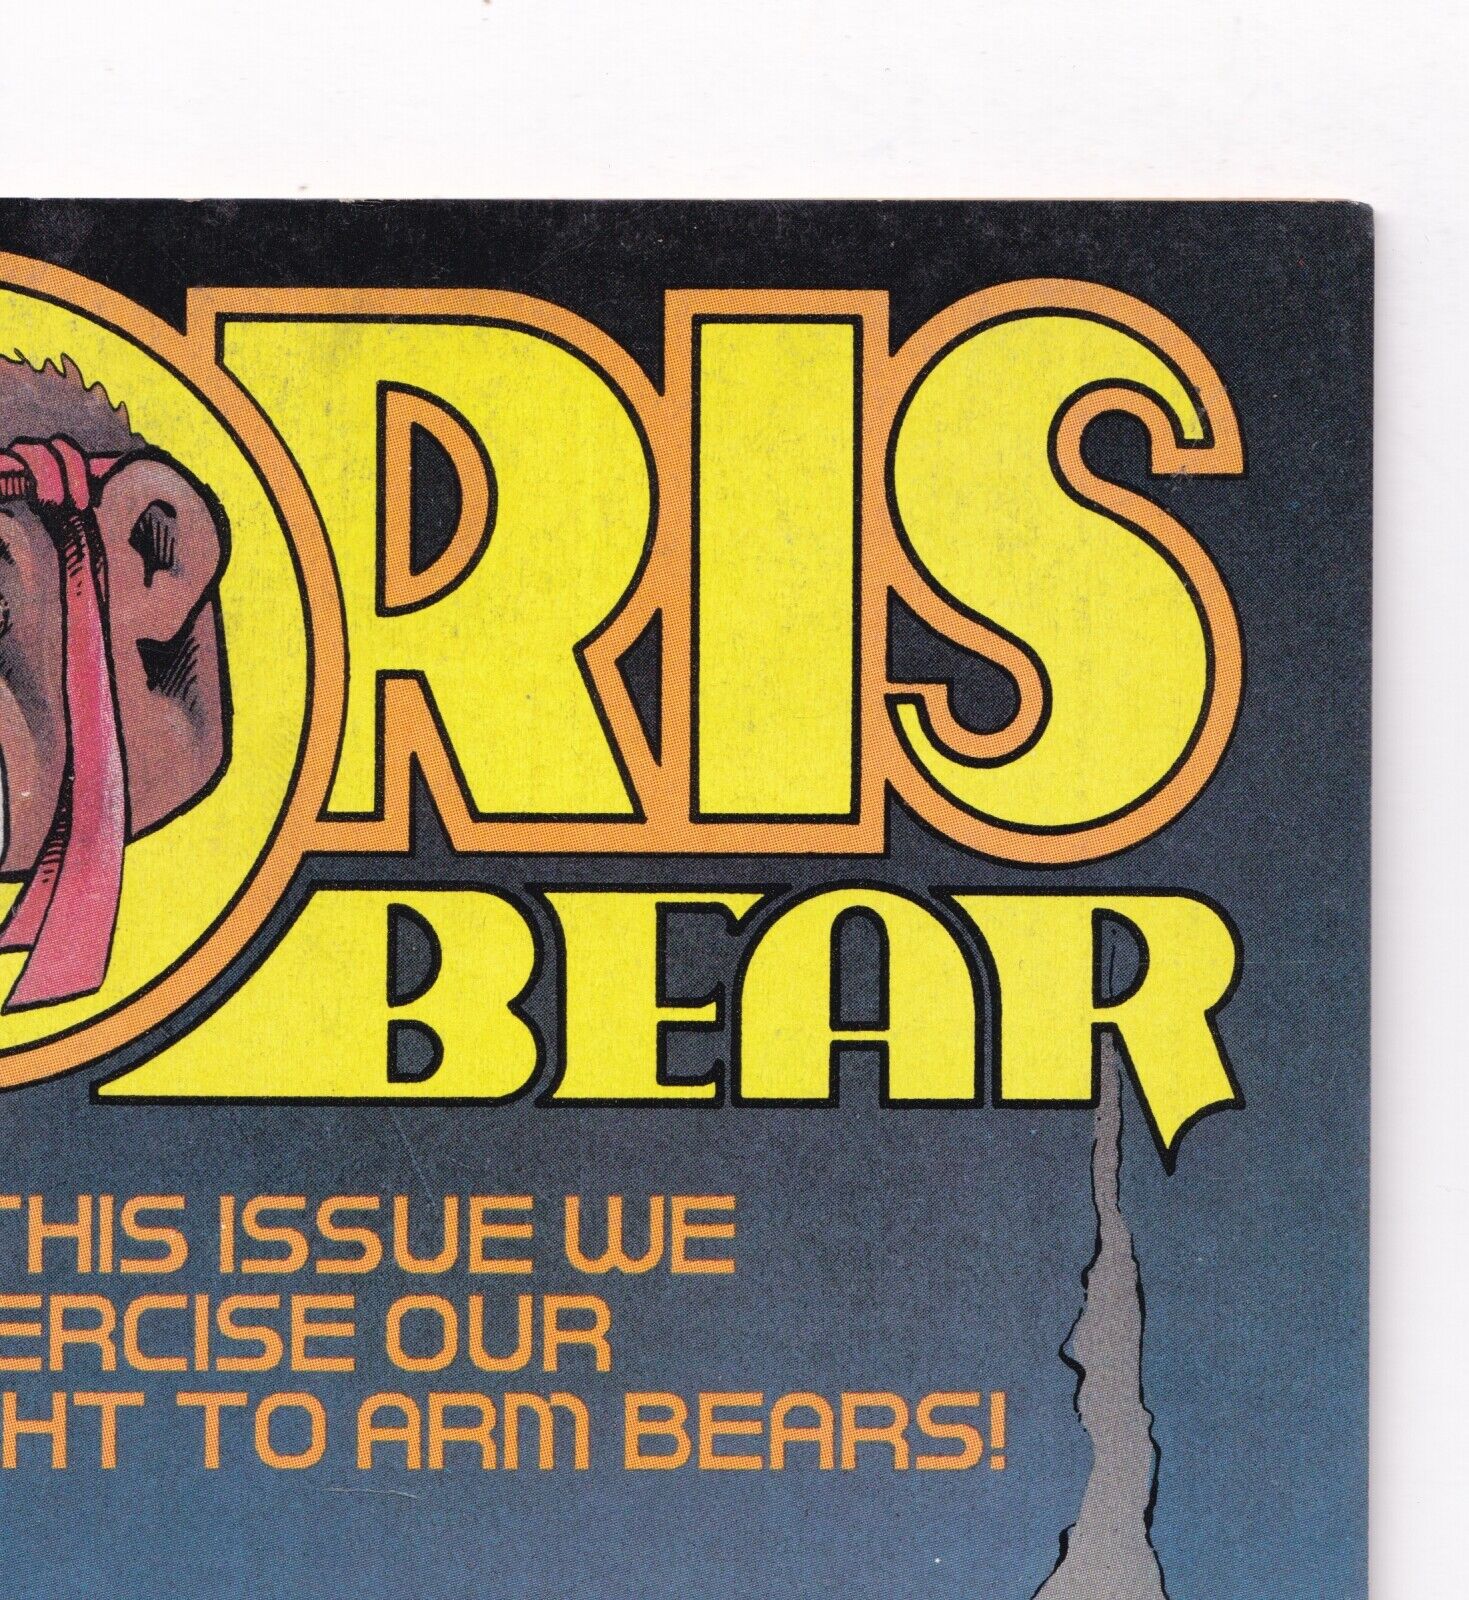 Boris The Bear #5 #10 (1986 Dark Horse) Some cover soiling tanning Без бренда - фотография #10